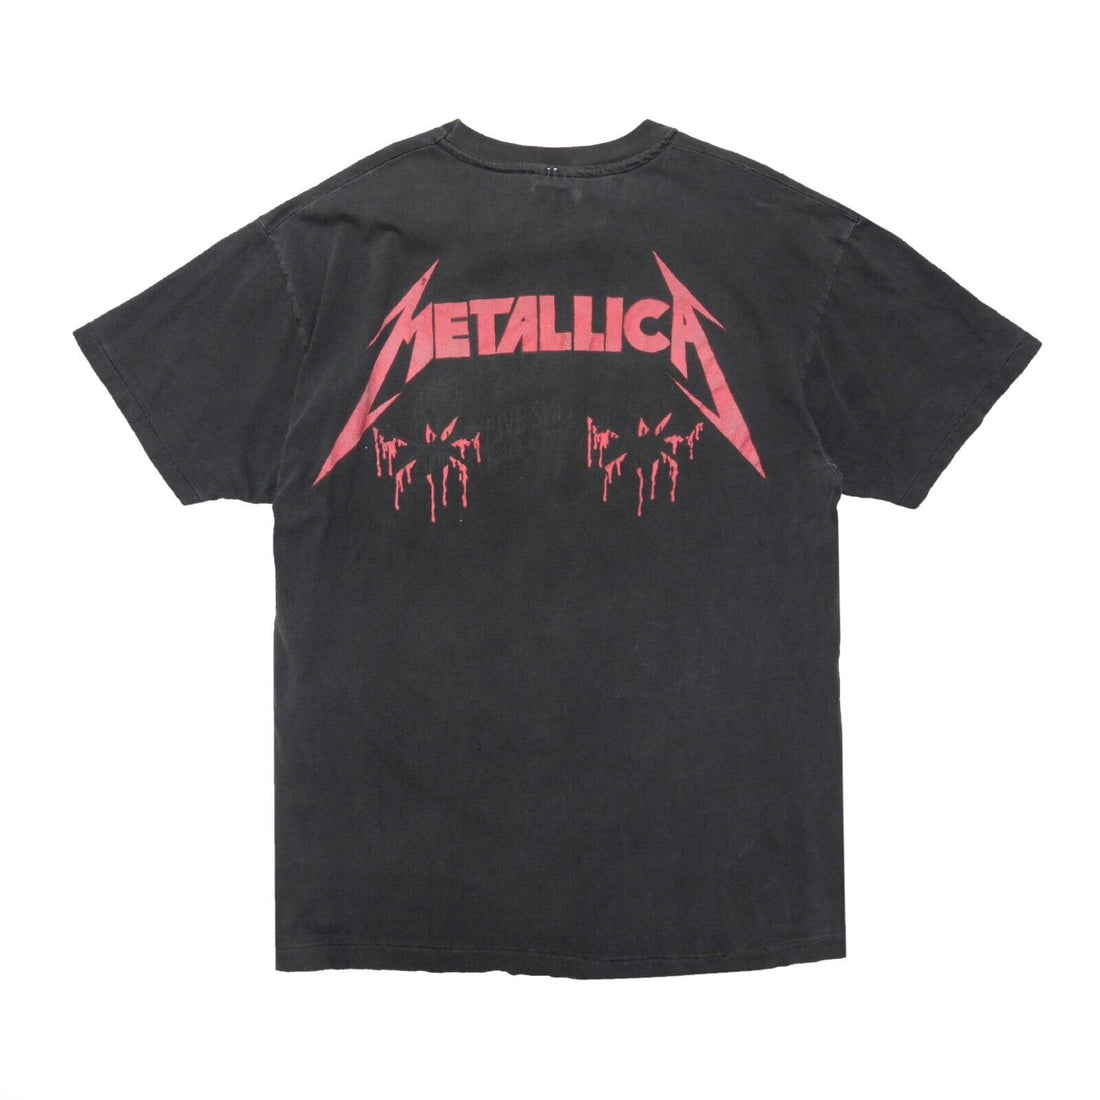 Vintage Metallica Binge & Purge T-Shirt Size XL Black Band Tee 90s